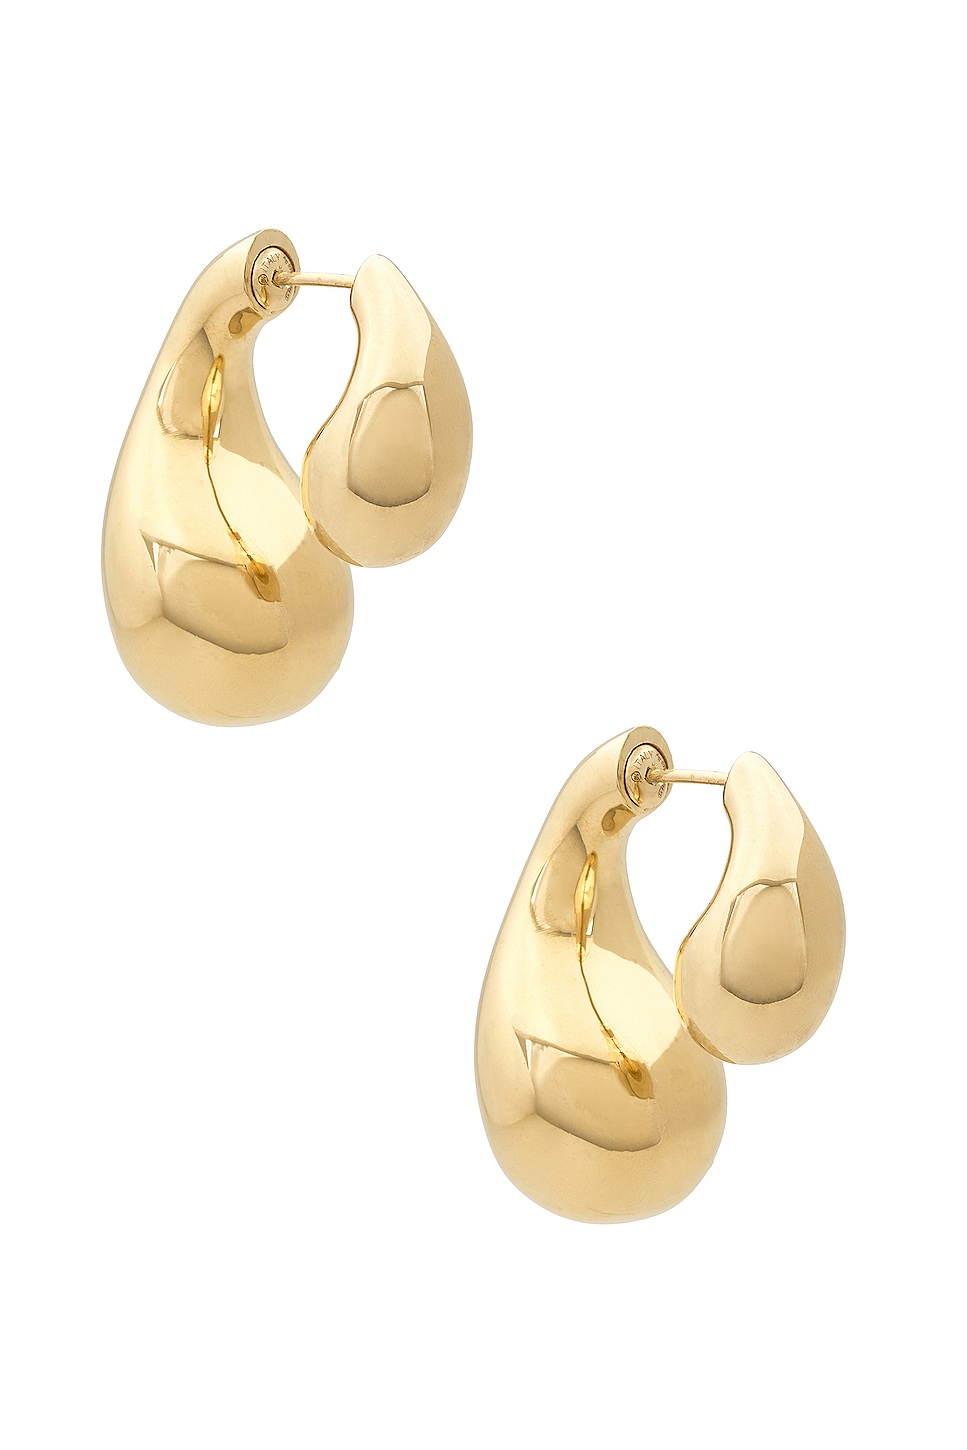 Bottega Veneta Teardrop Earrings in Gold | FWRD